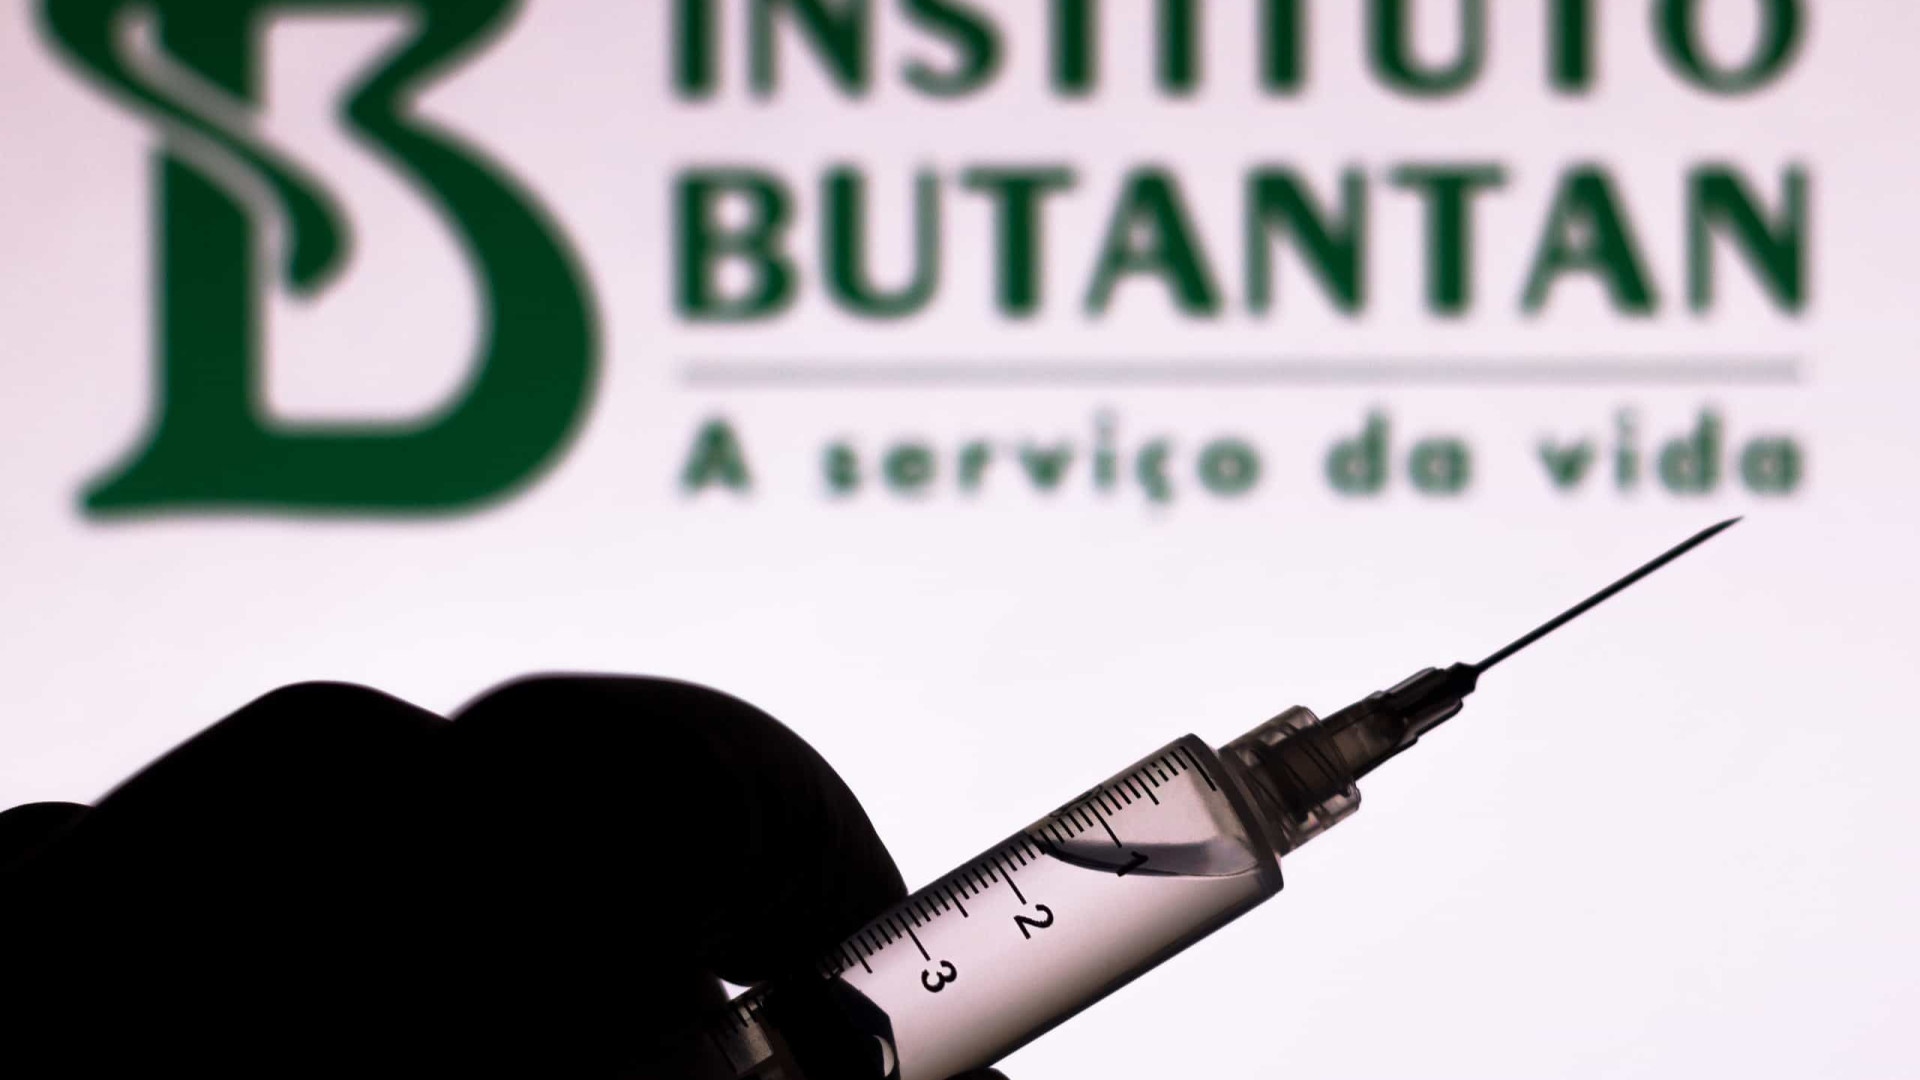 Butantan espera chegada de 5,4 mil litros de insumos para vacina no dia 3